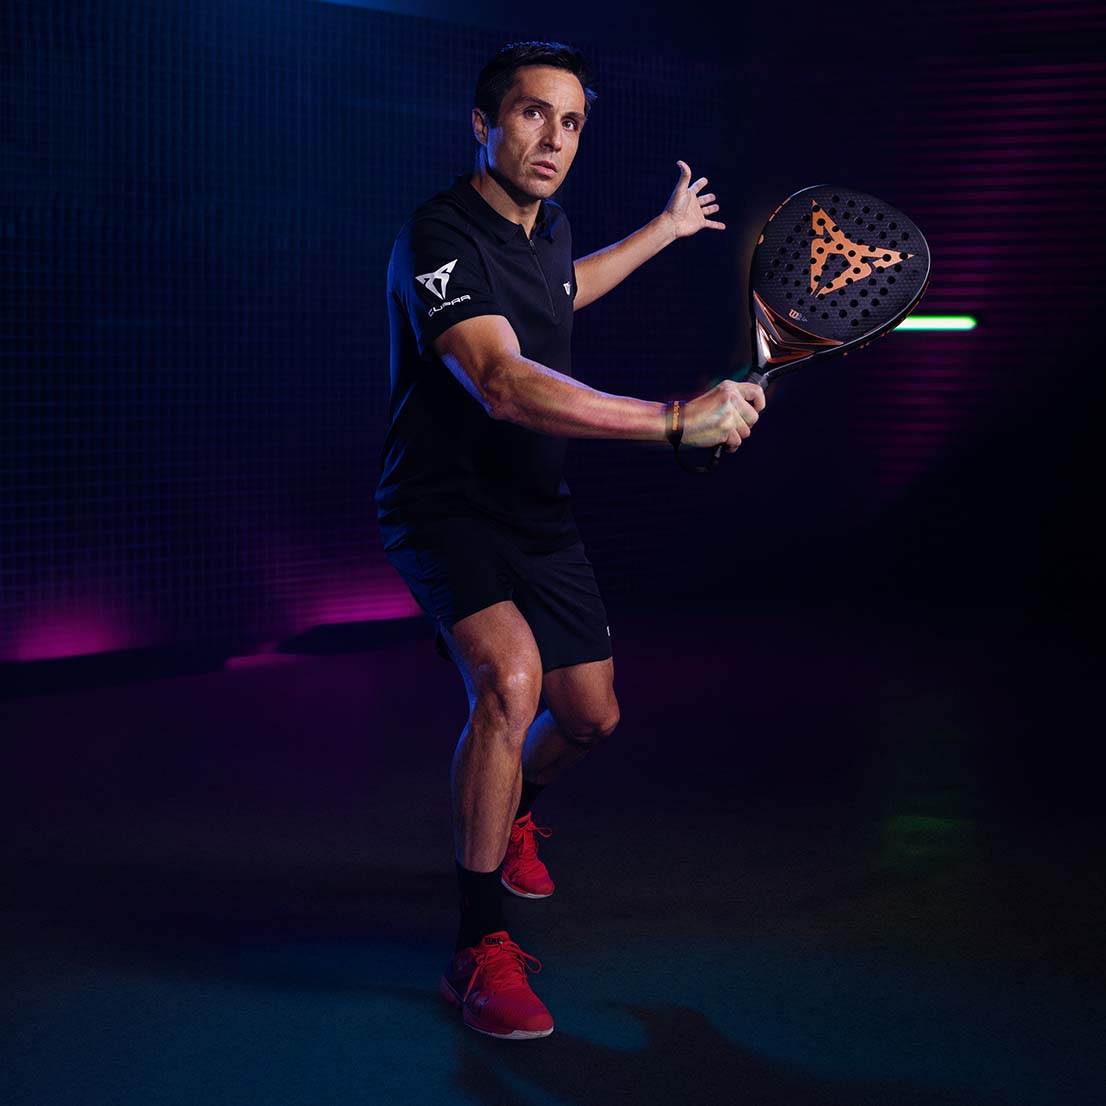 The professional padel player, Fernando Belasteguín with the CUPRA padel racket.